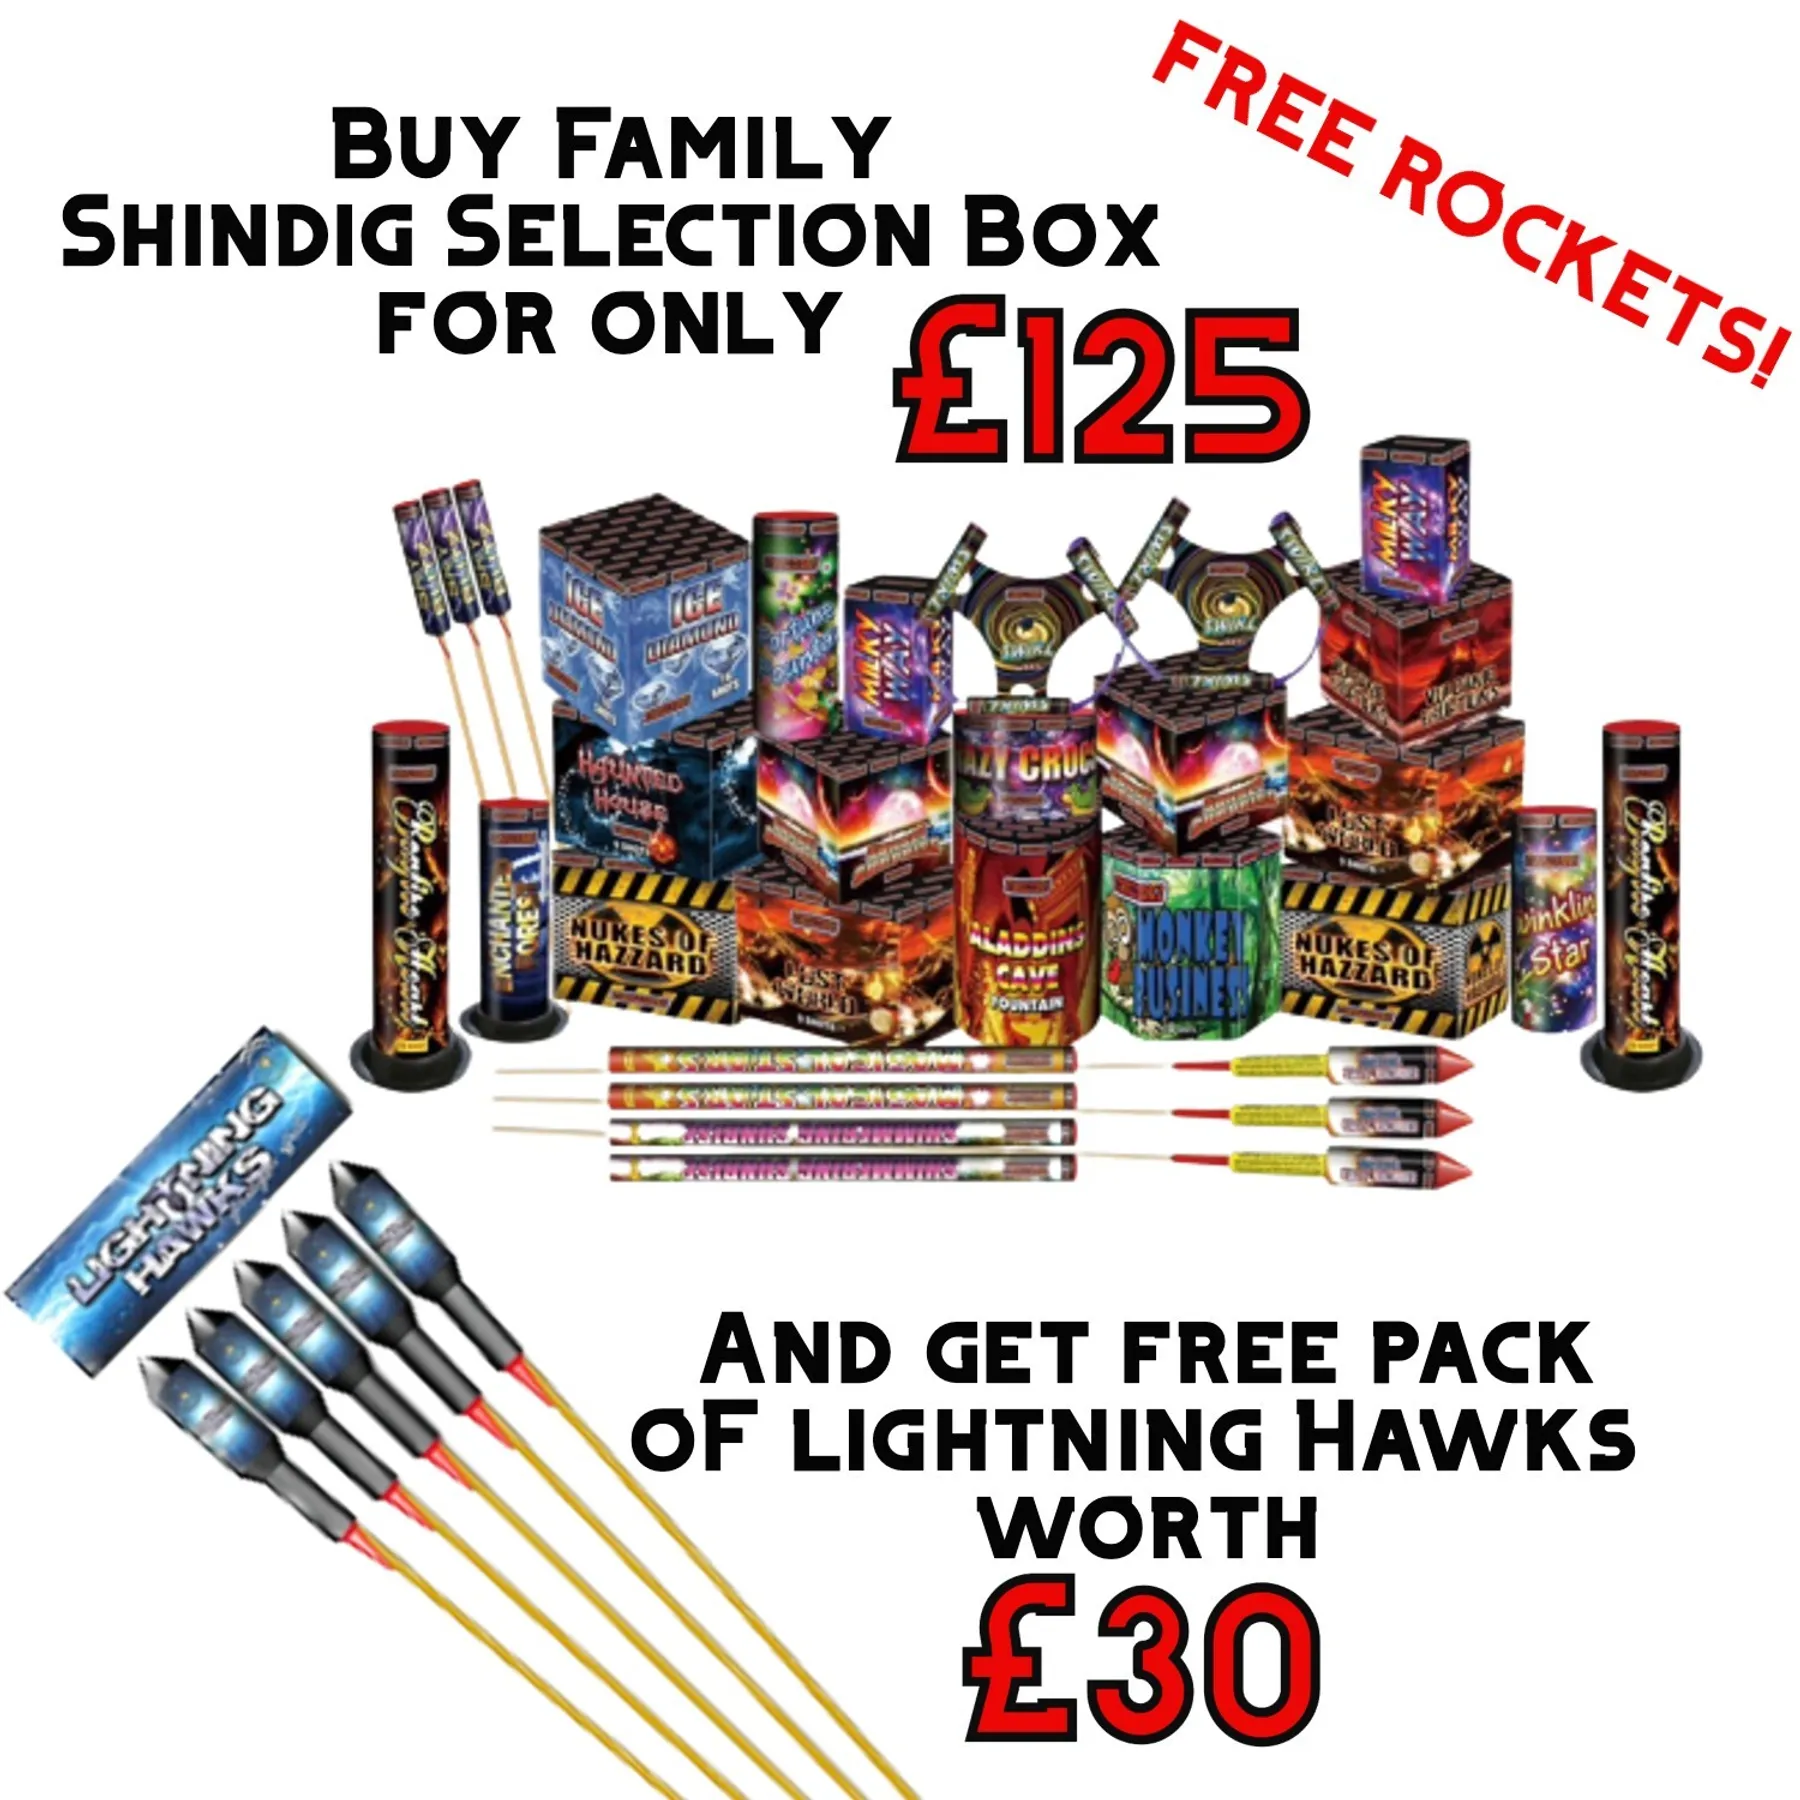 Shindig Selection Box Free Rockets Manchester Fireworks